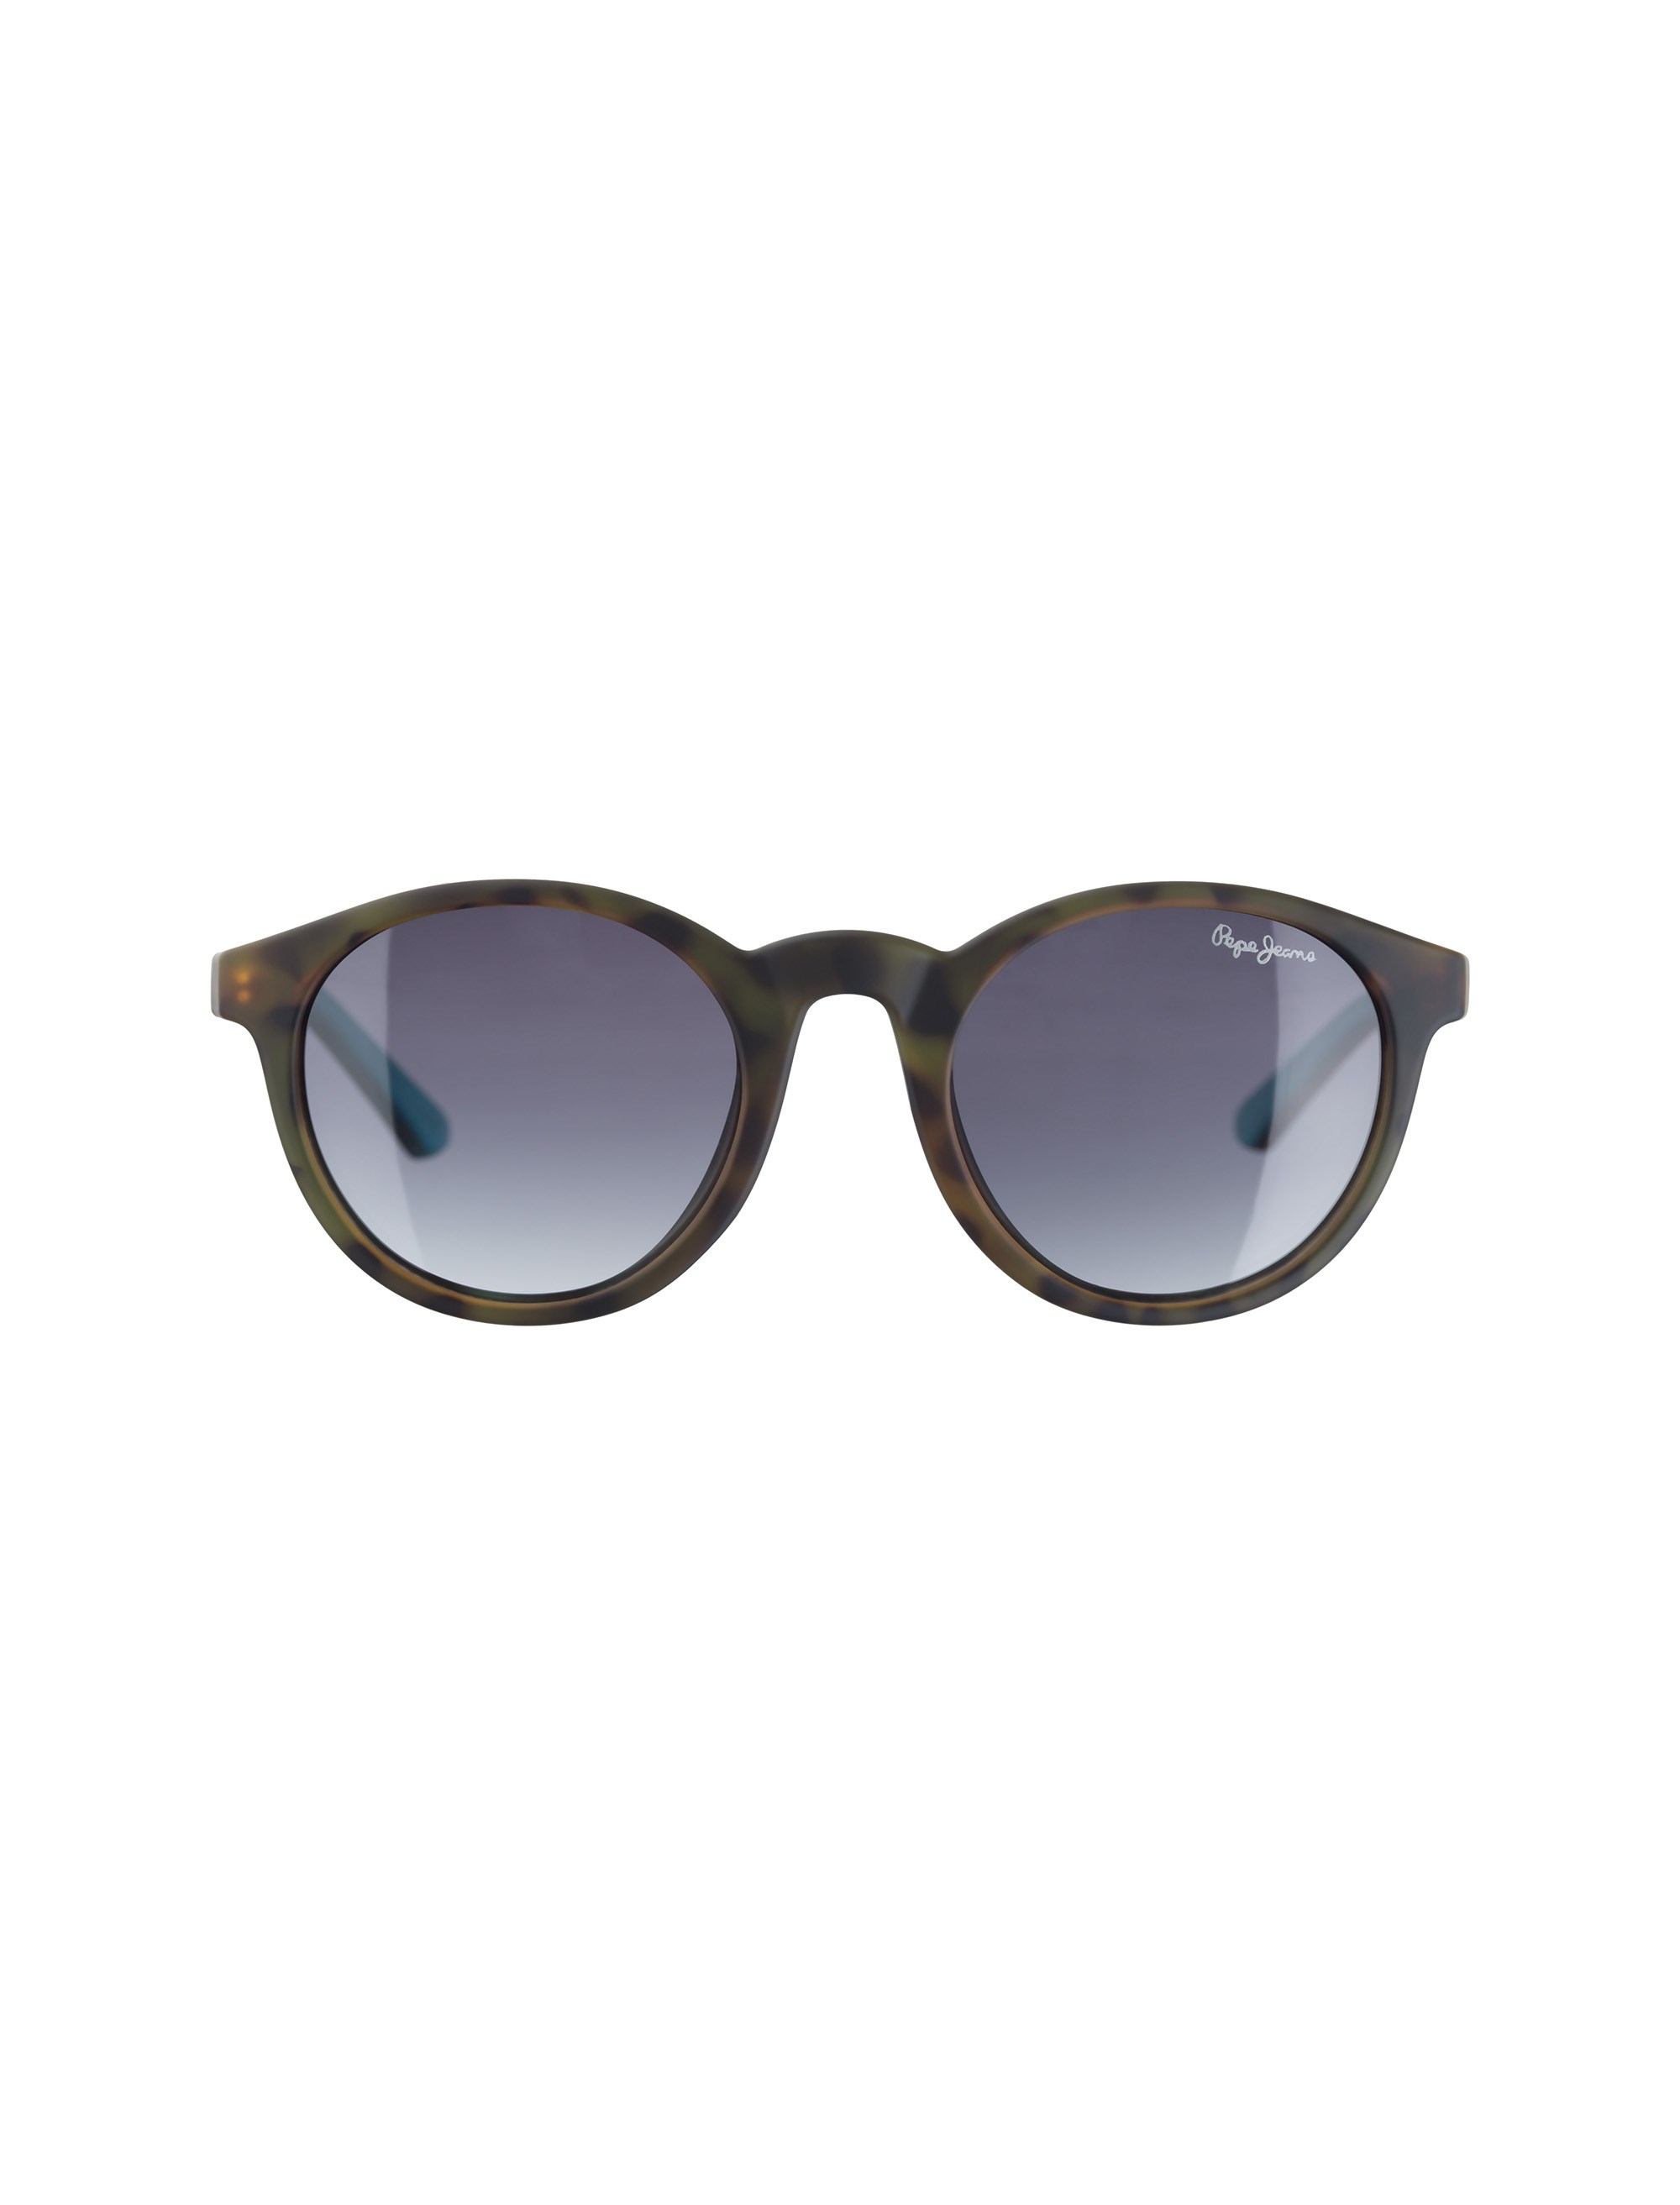 عینک آفتابی پنتوس بچگانه - پپه جینز